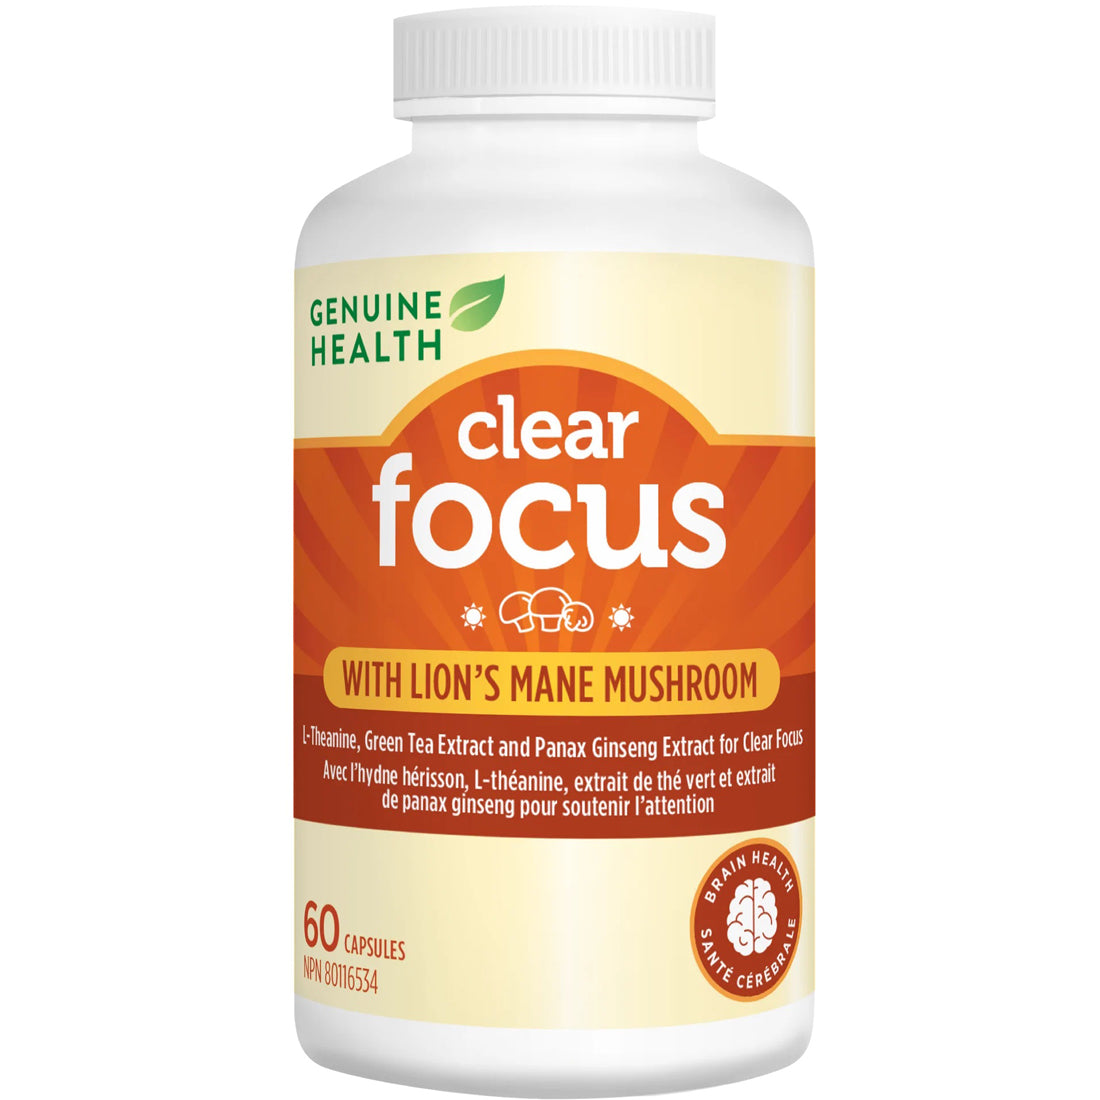 Genuine Health Clear Focus with Lion's Mane Mushroom, 60 Capsules